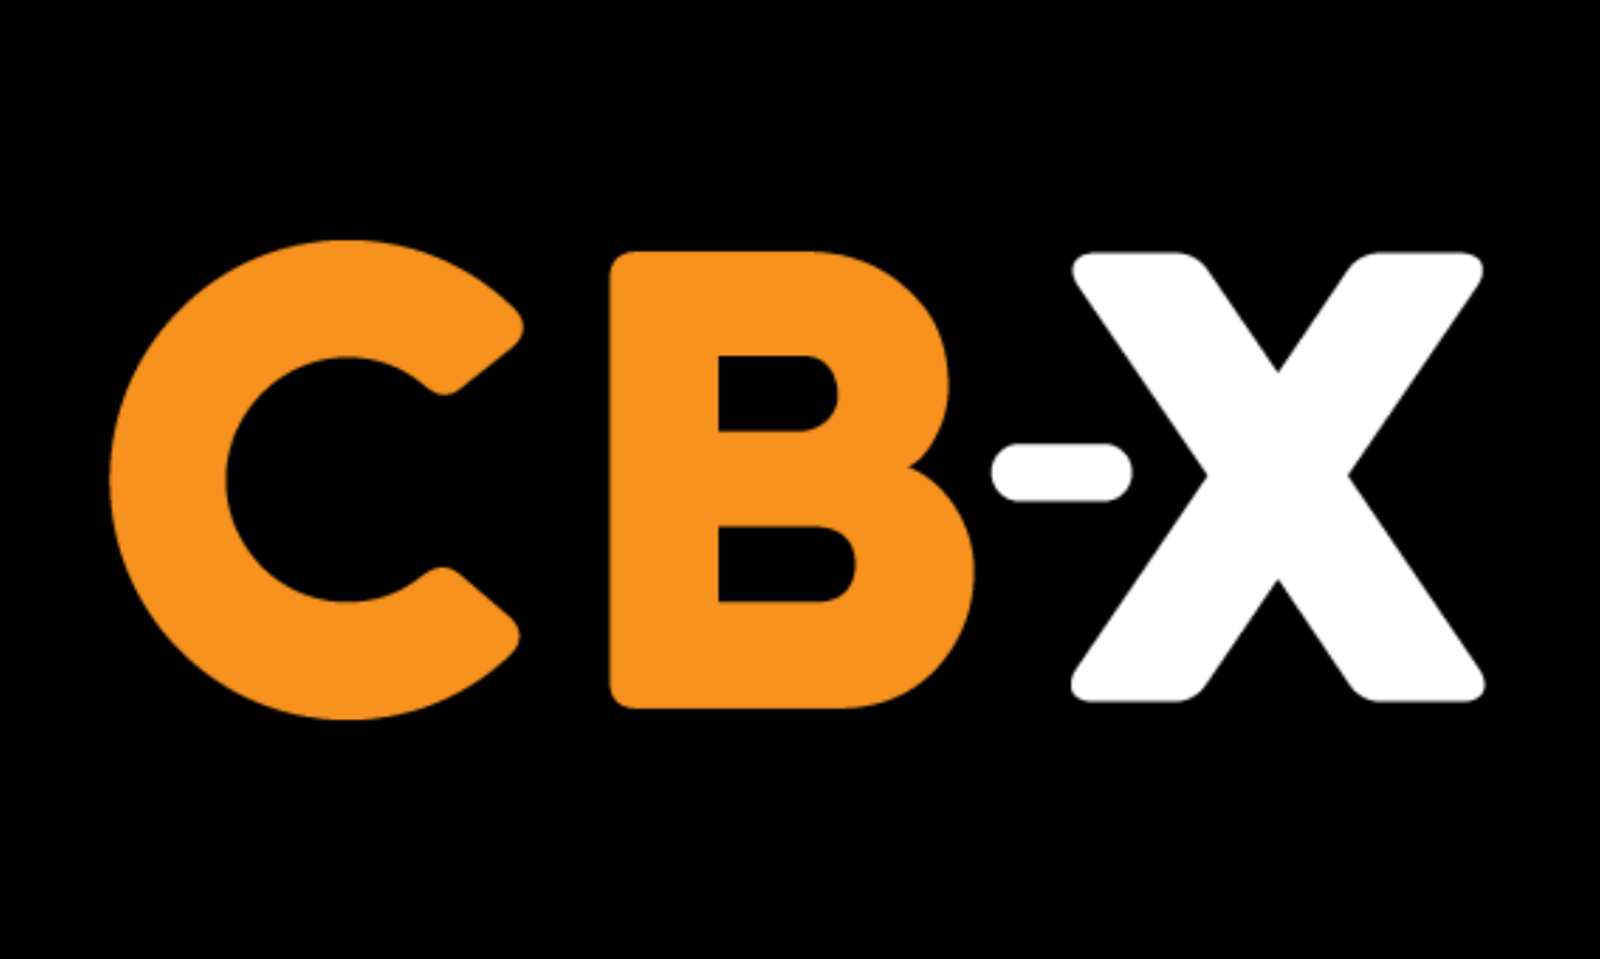 CB-X Receives 2023 StorErotica Award Nomination